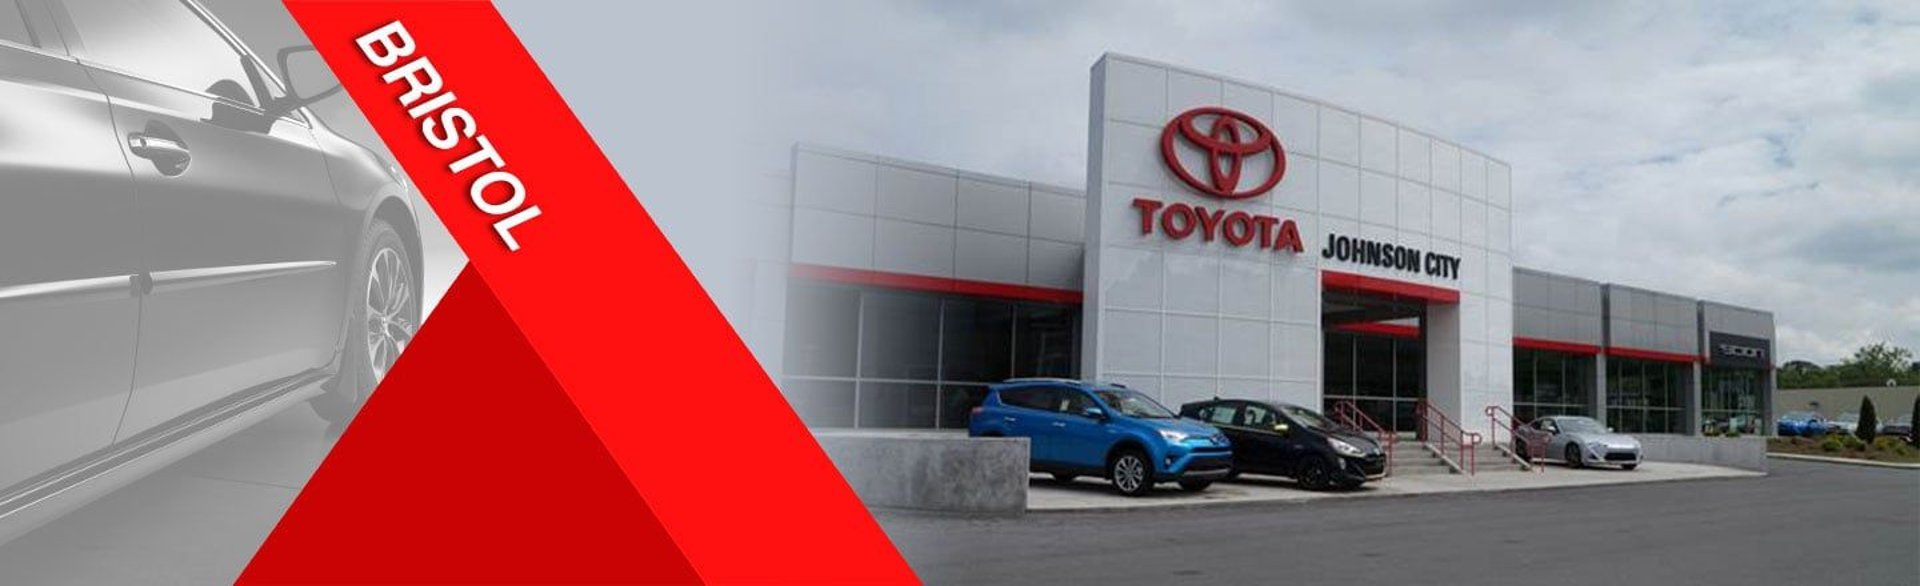 Bristol, TN, Drivers Trust Johnson City Toyota